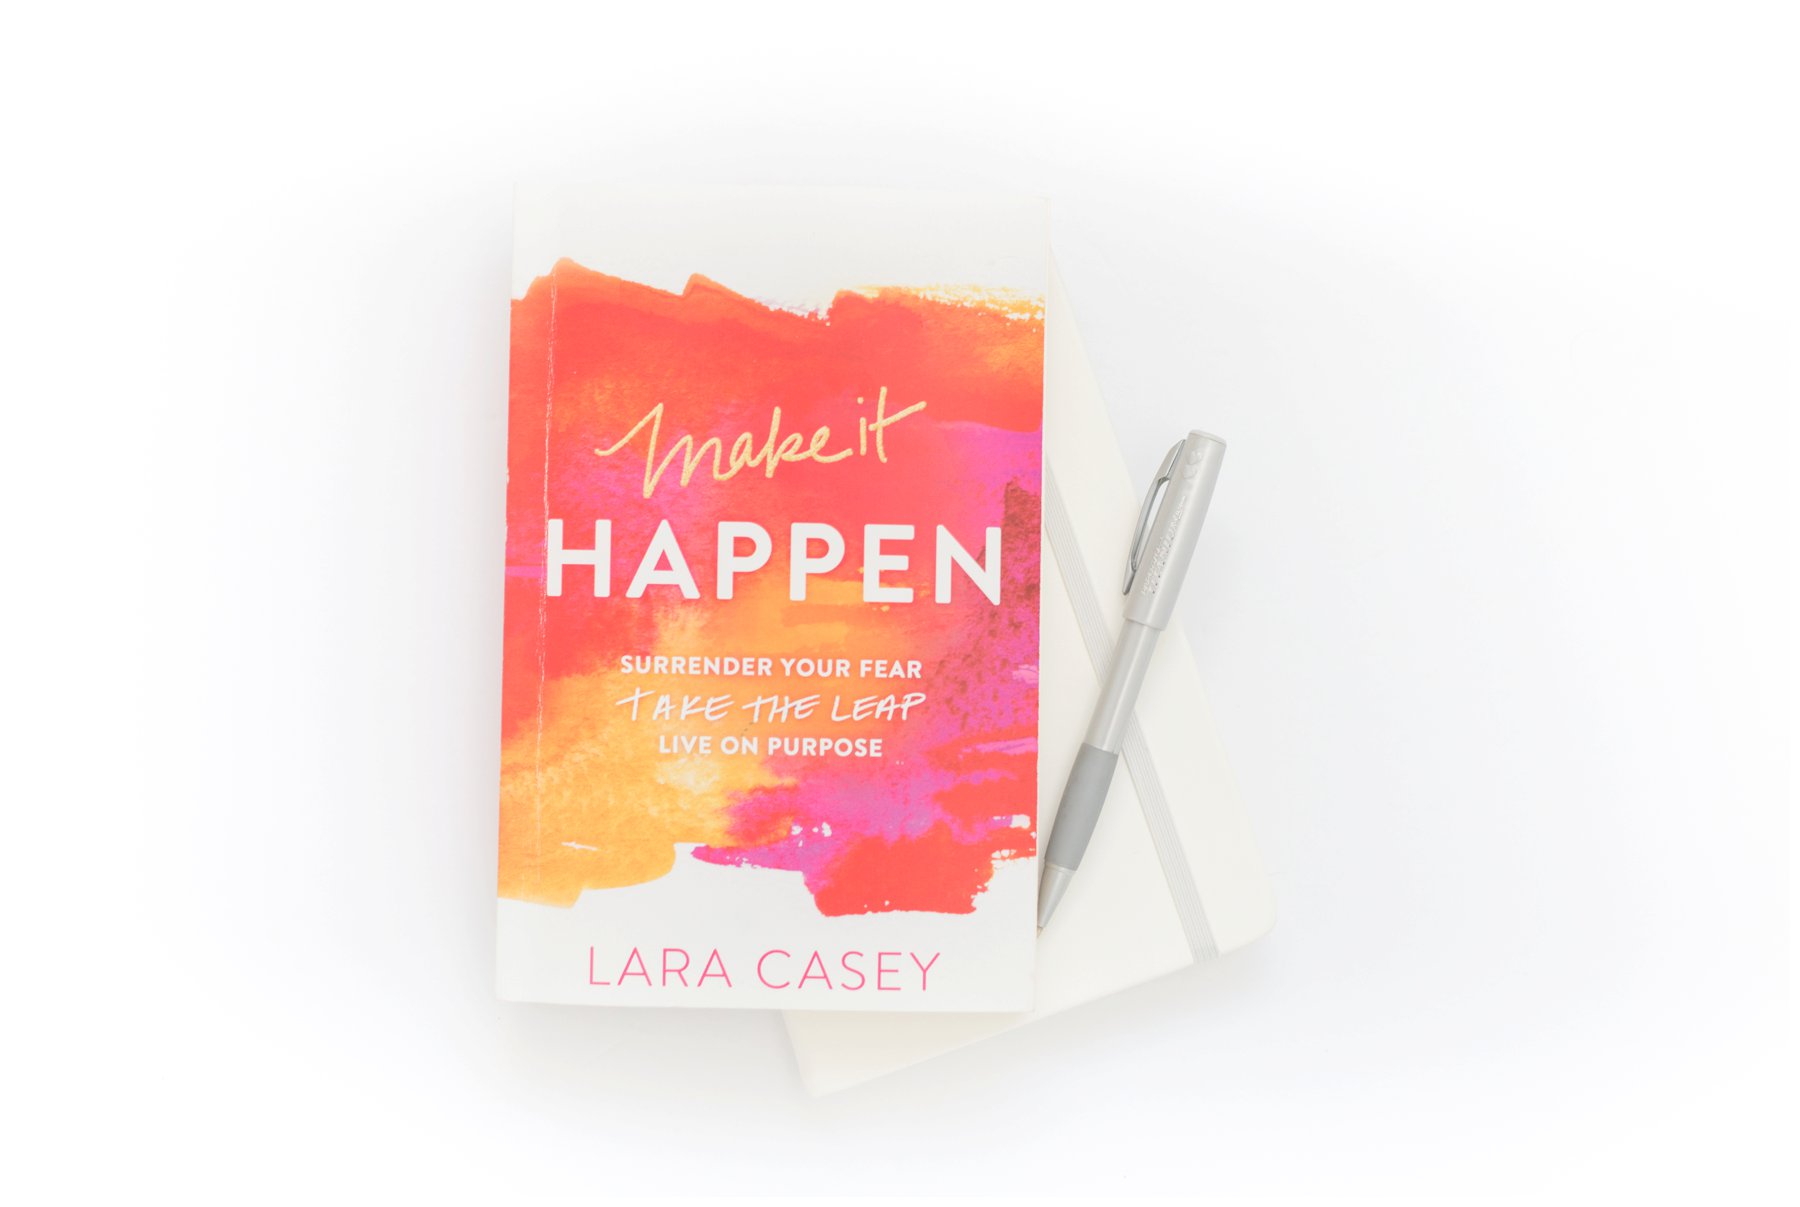 Make it Happen book by Lara Casey 2018 goals